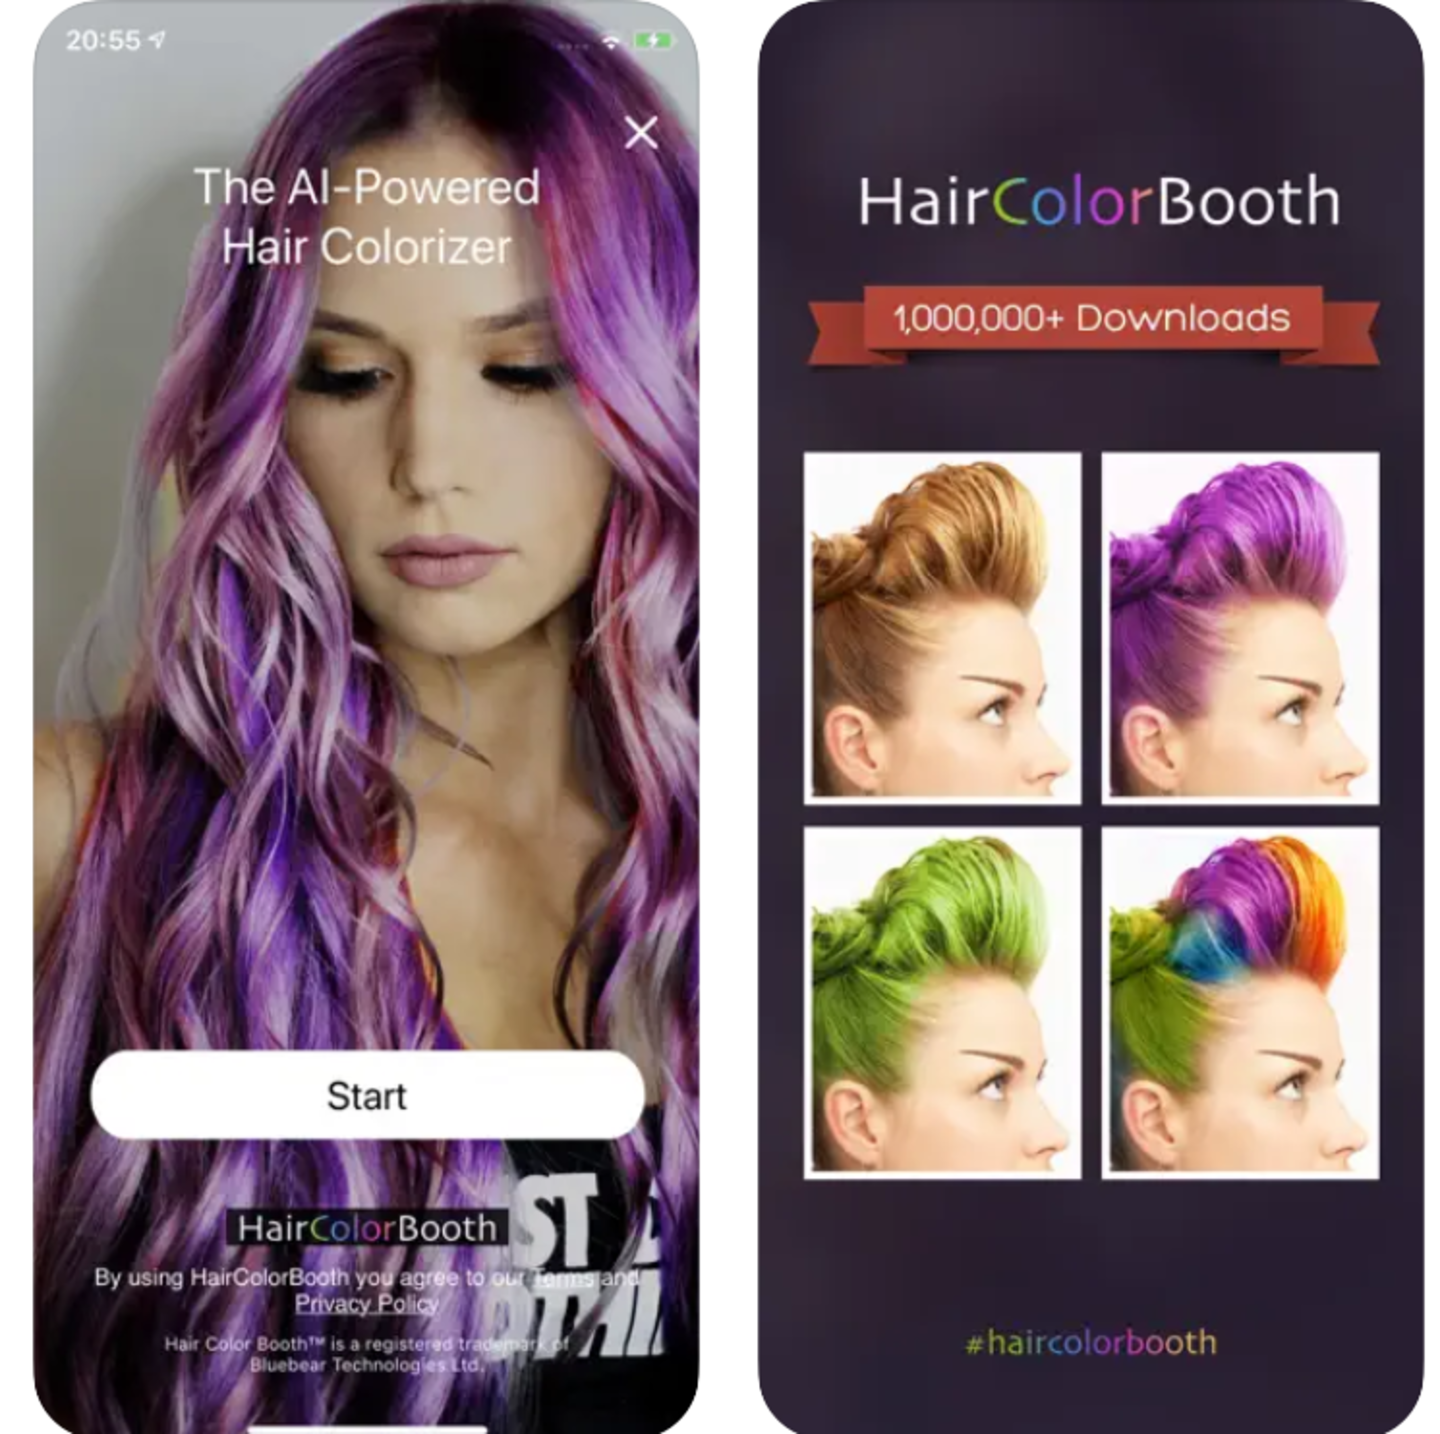 haircolor booth app